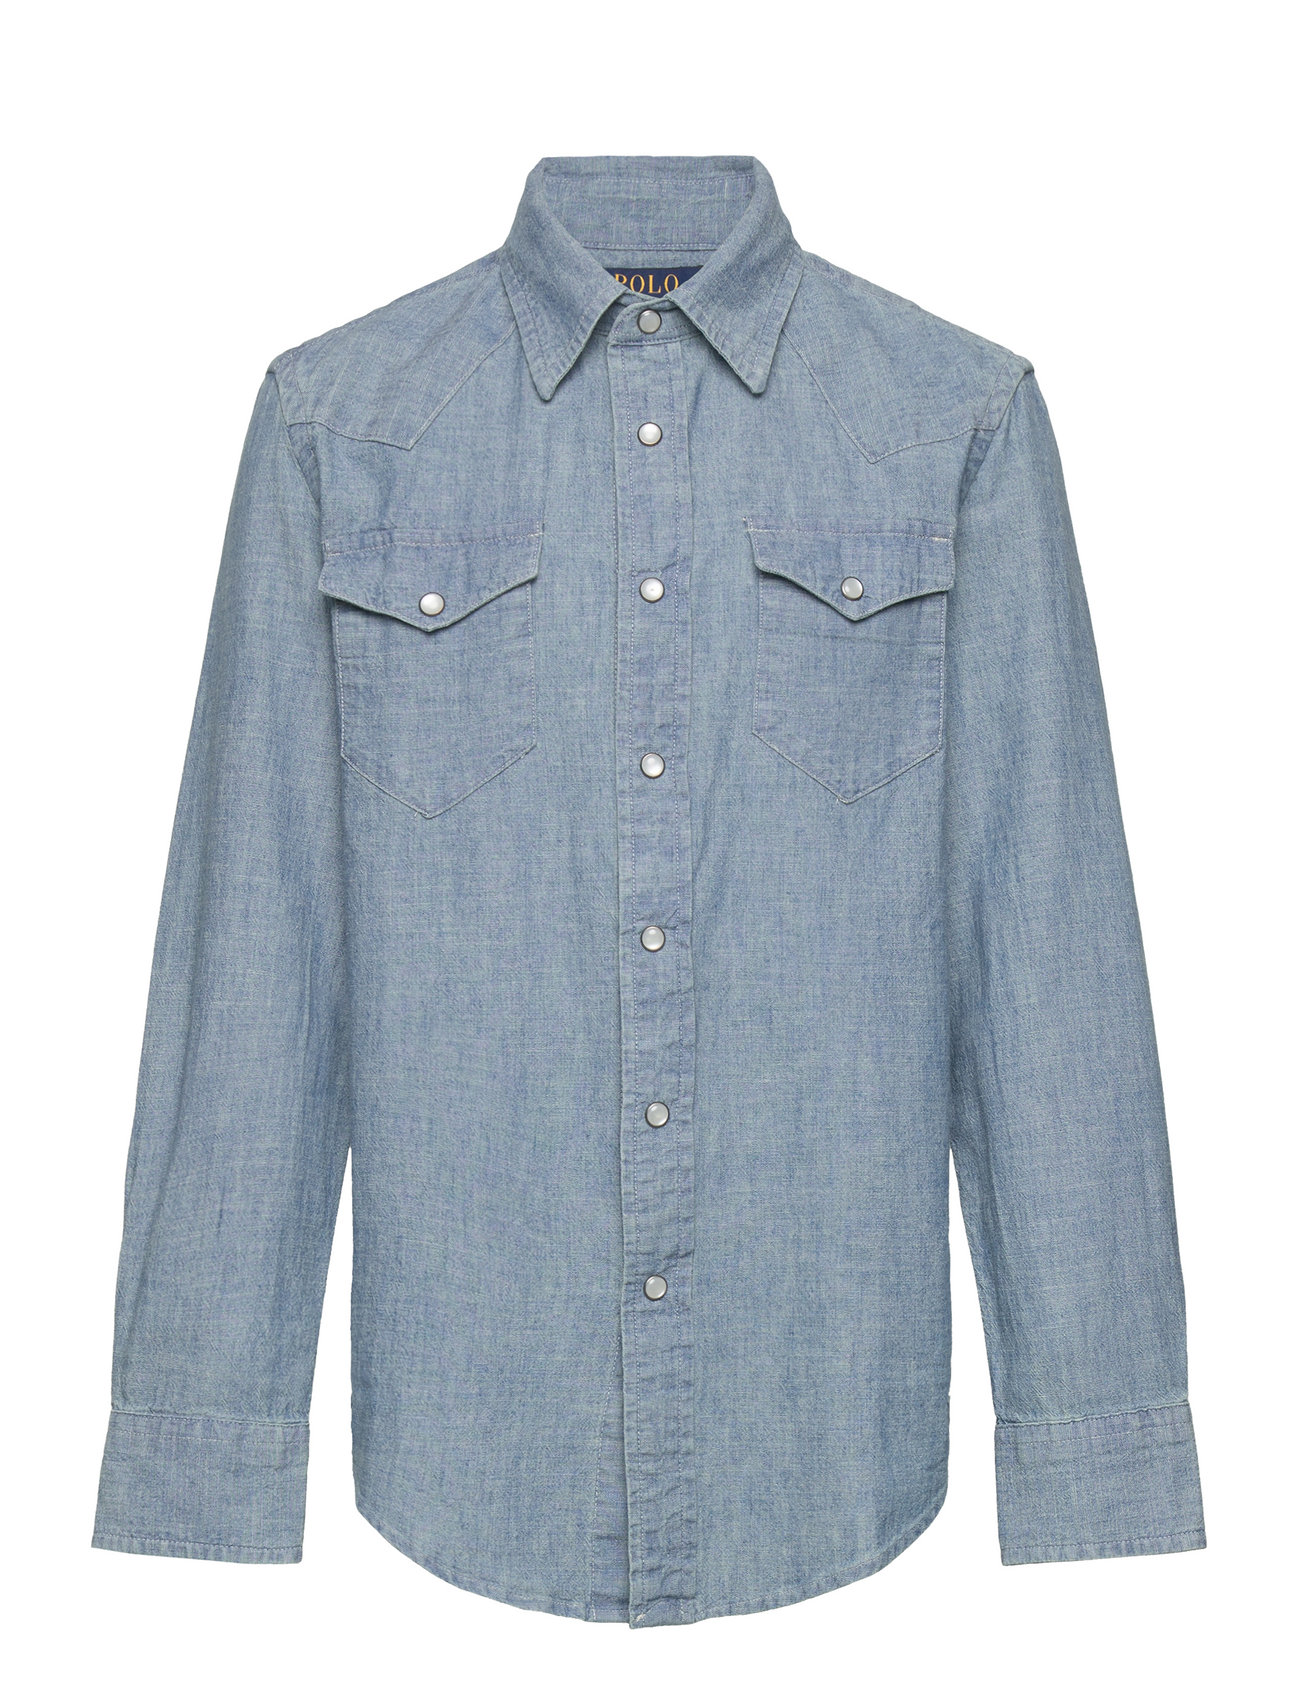 Cotton Chambray Western Shirt Tops Shirts Long-sleeved Shirts Blue Ralph Lauren Kids